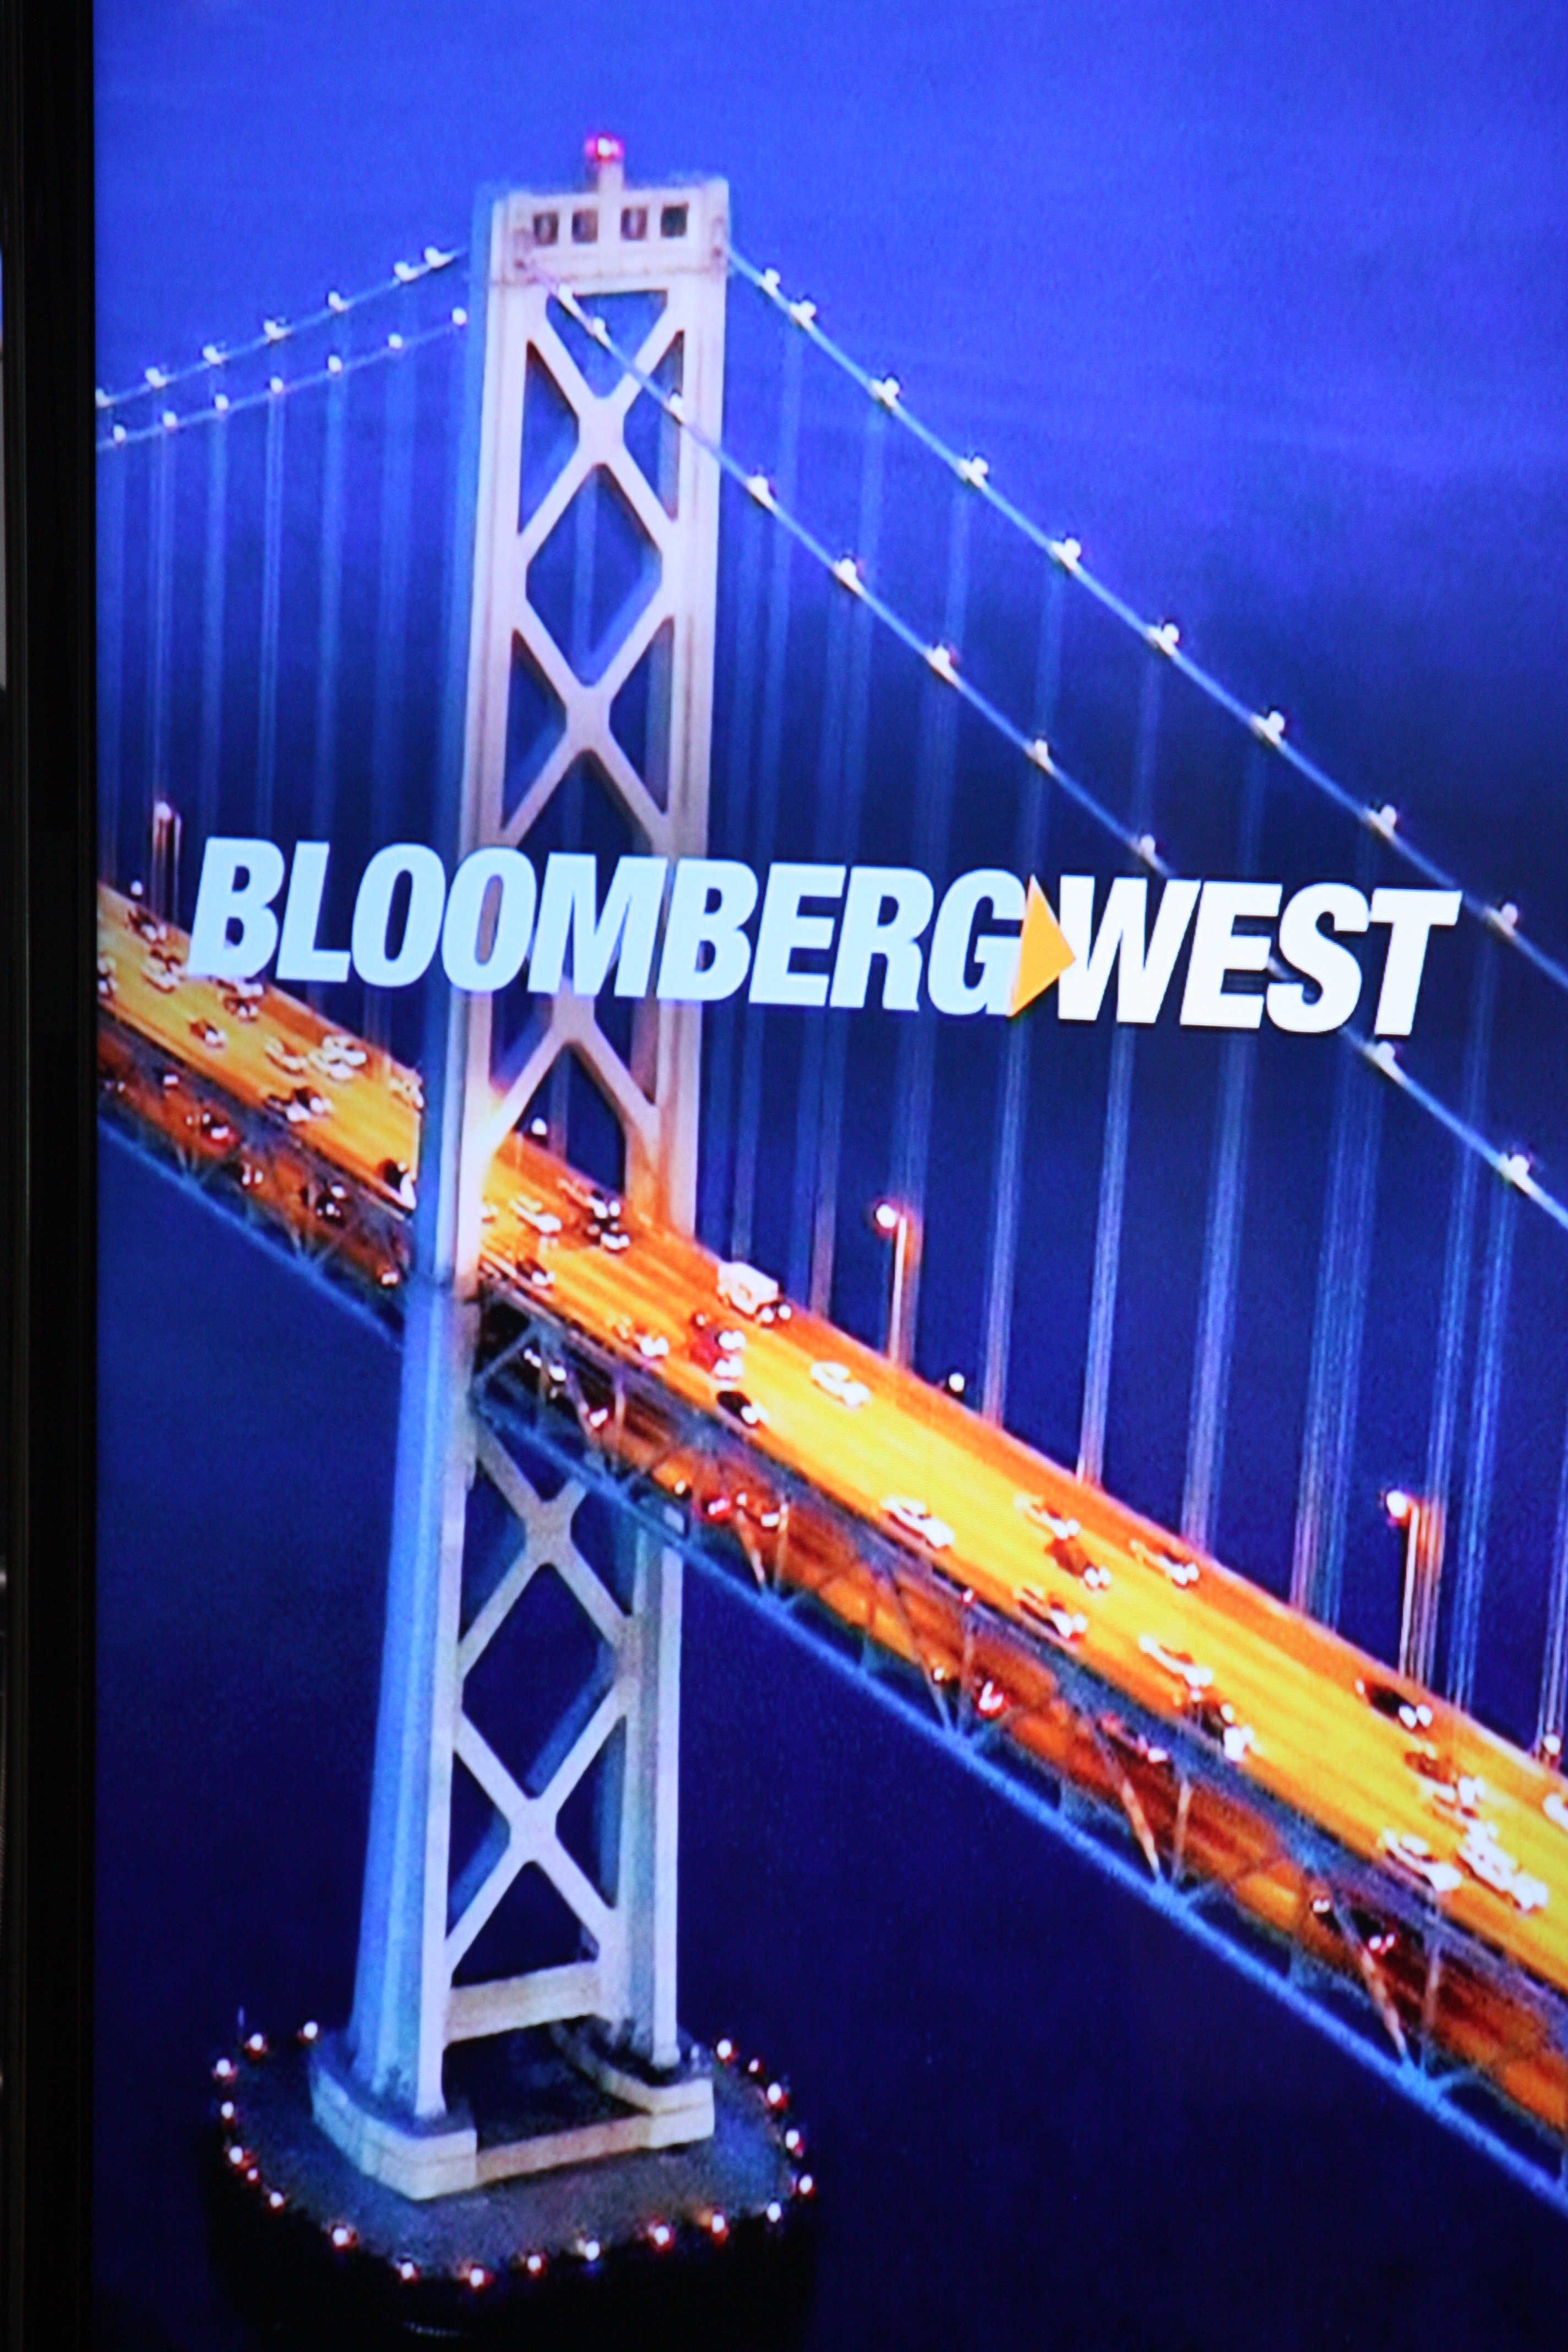 Bloomberg West